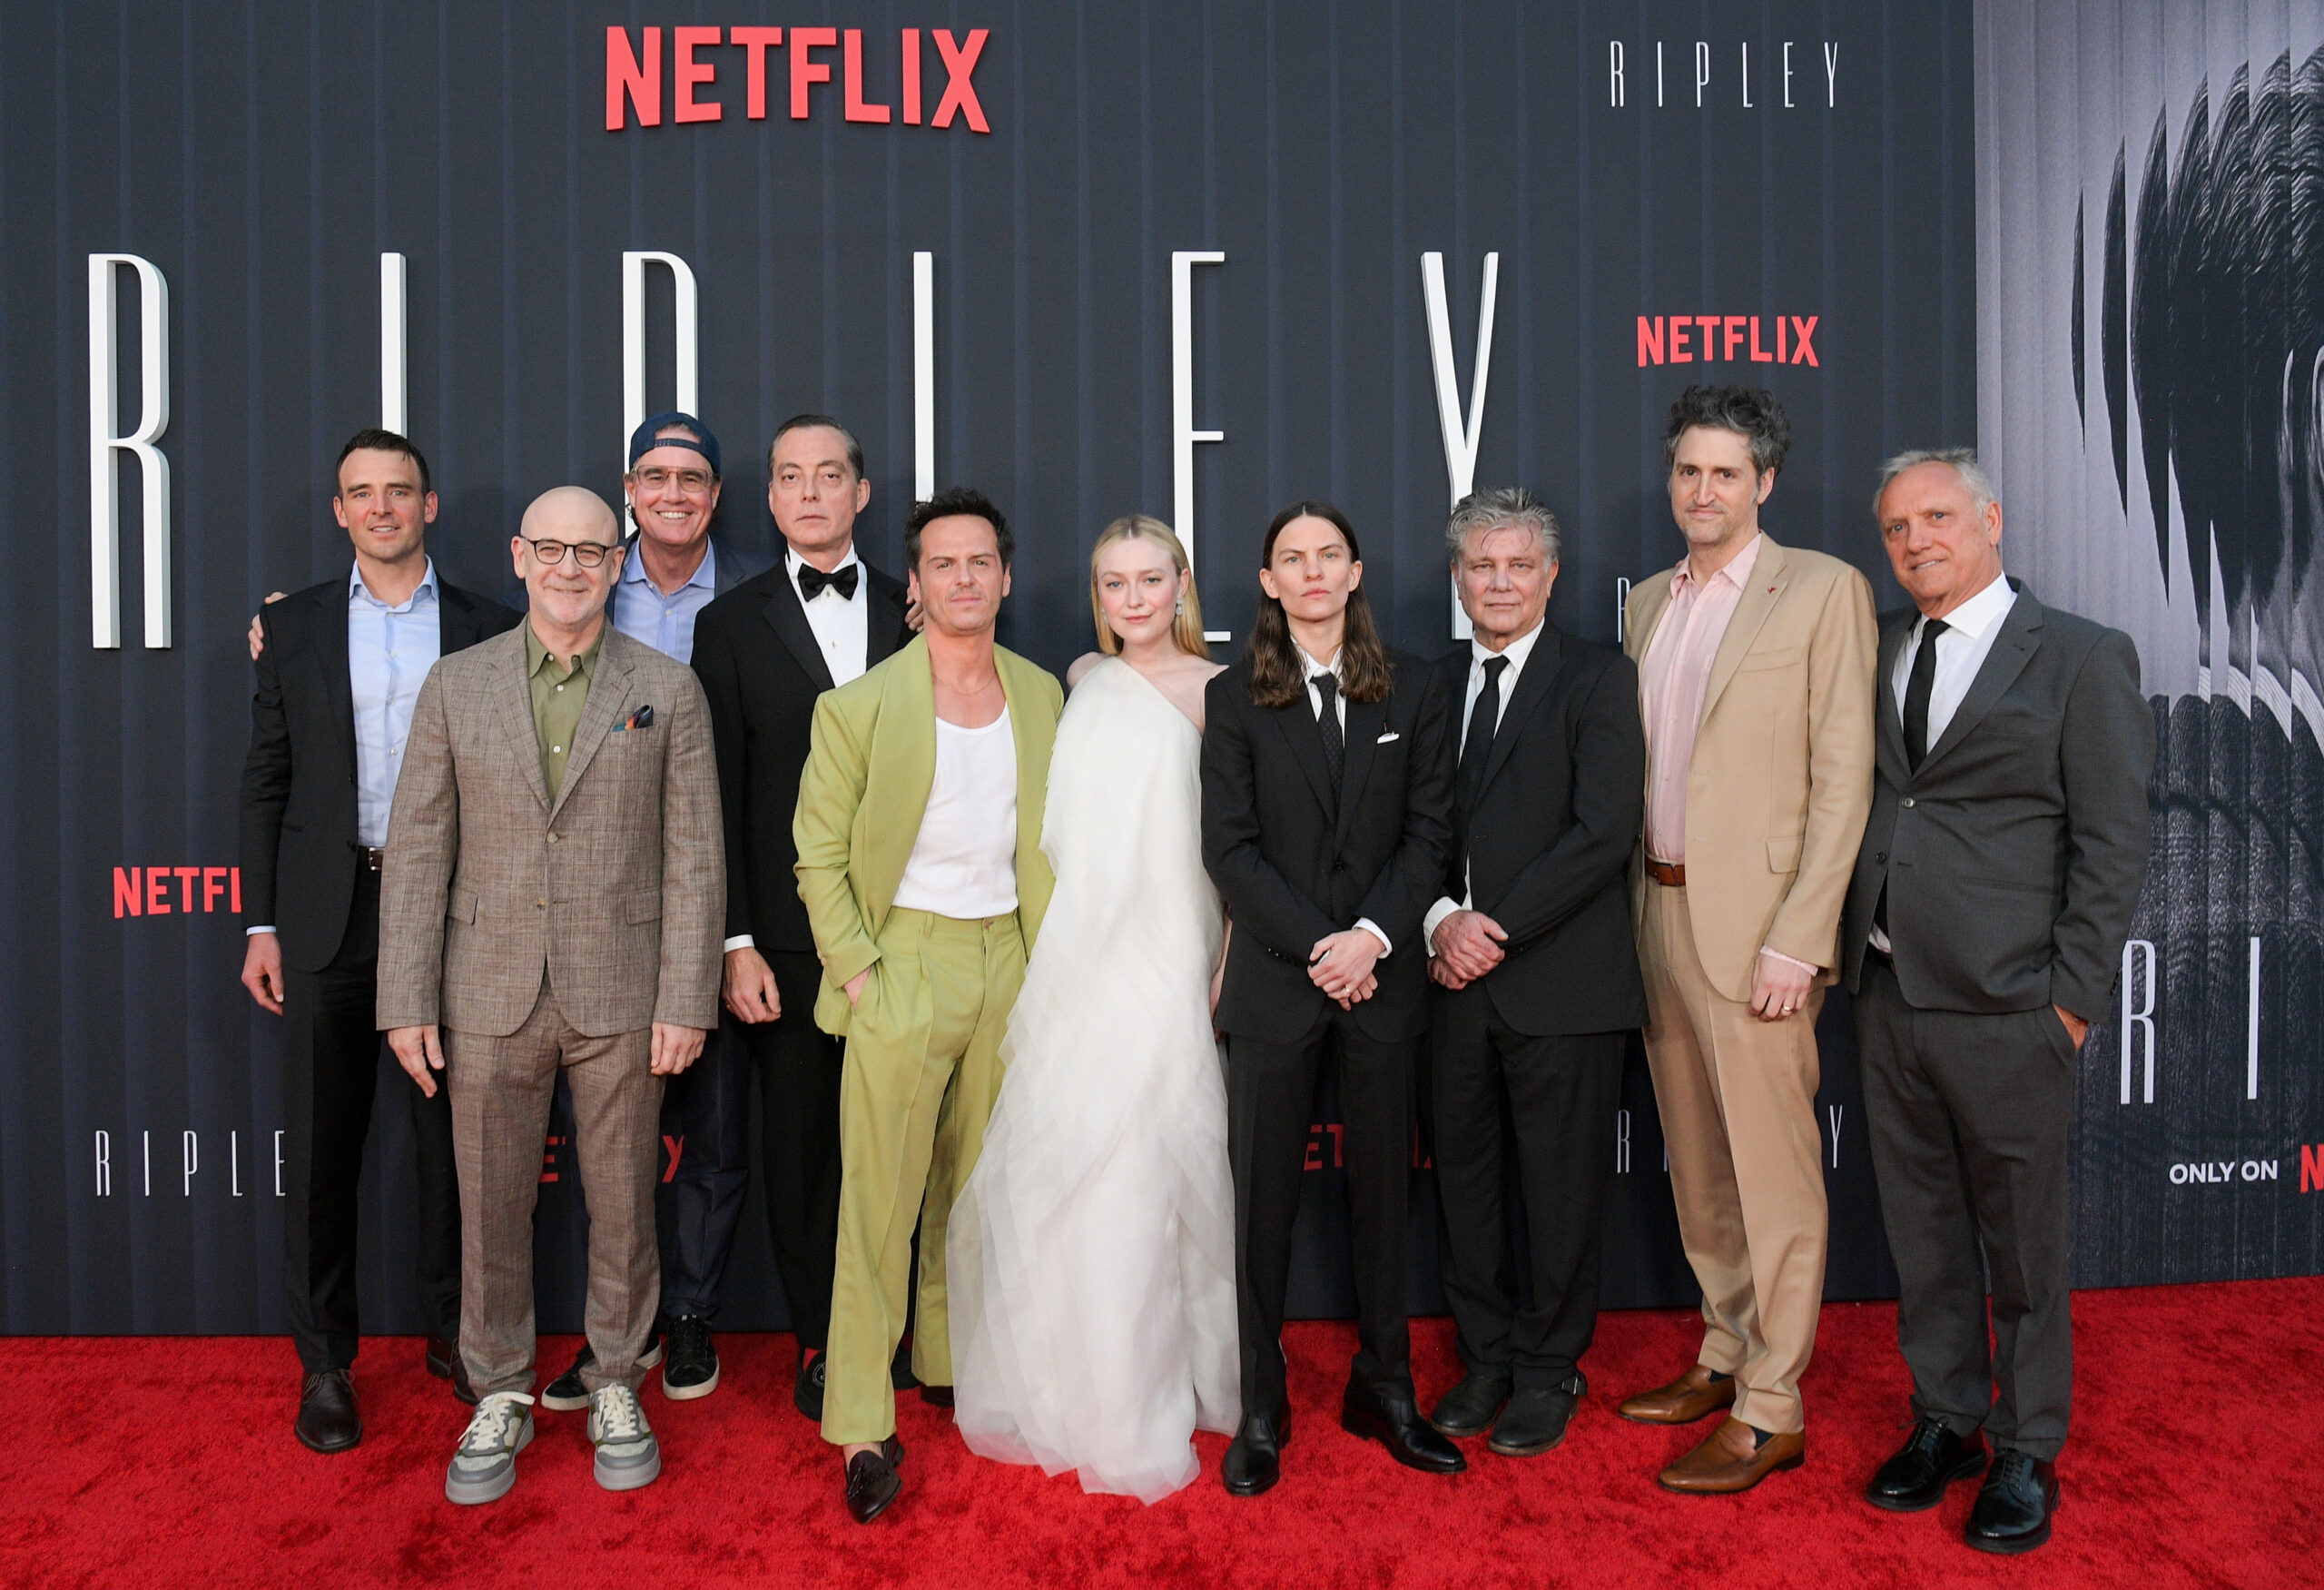 Netflix has released new Andrew Scott series based on the Ripley novels